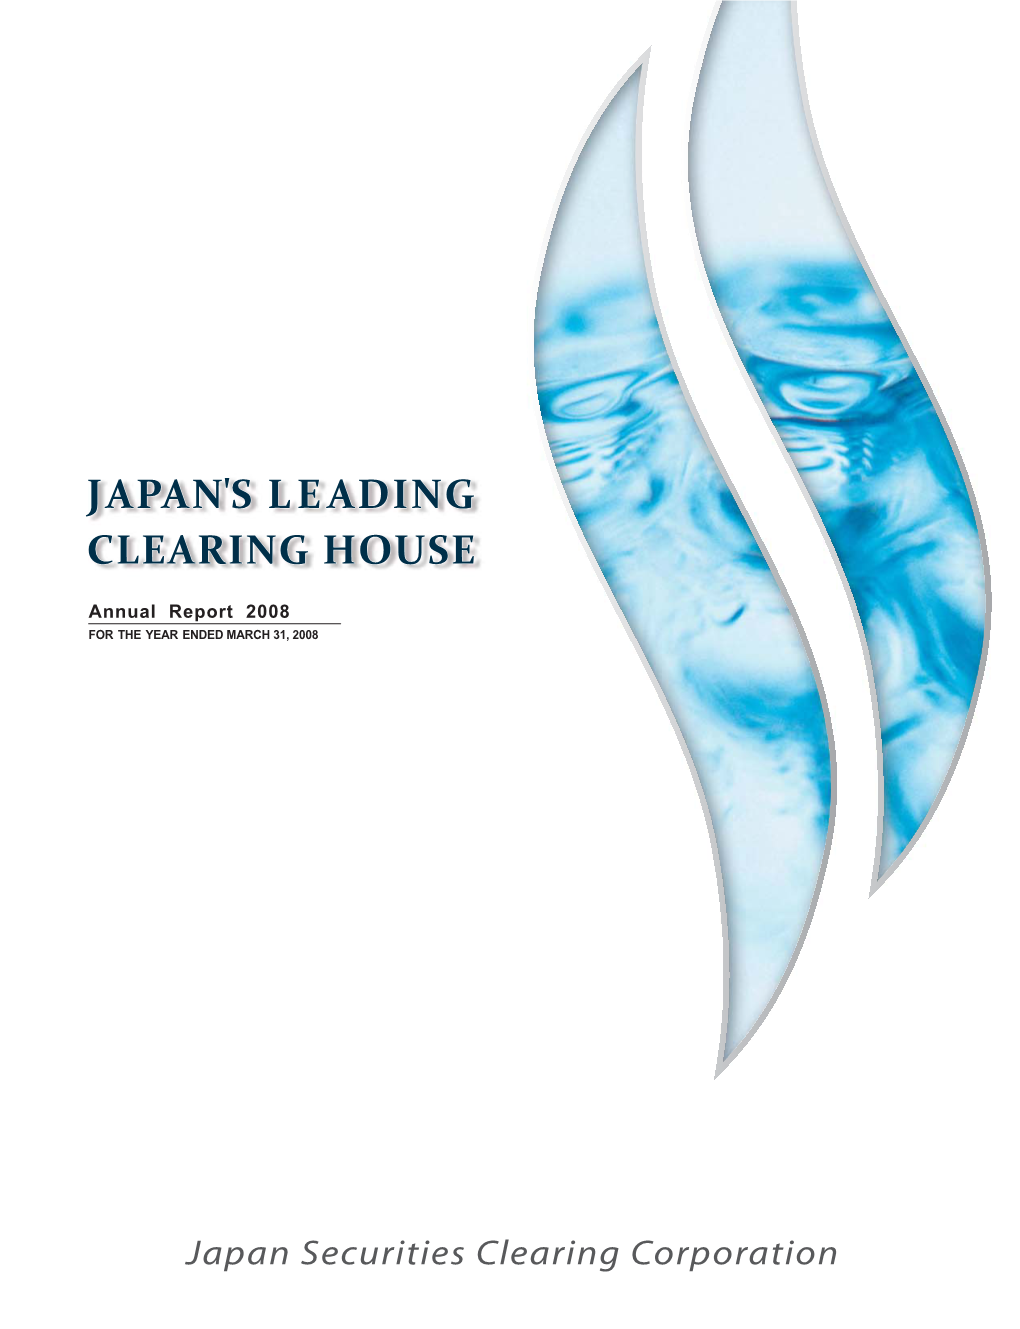 Role of JSCC in Japan's Securities Market